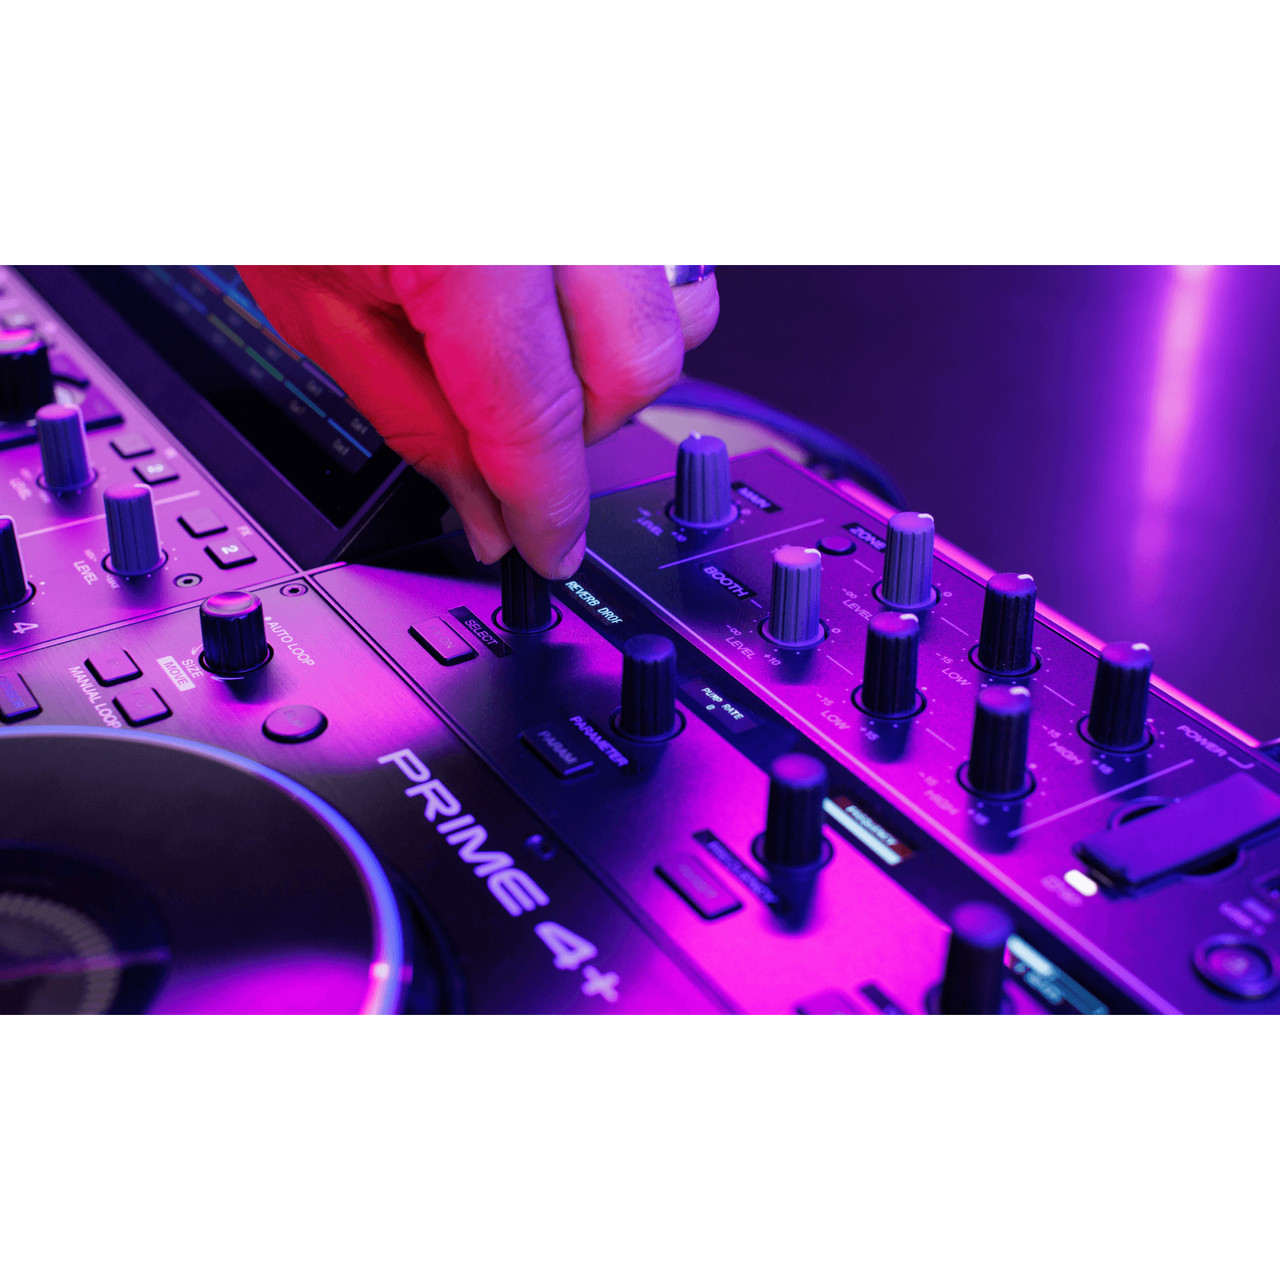 DENON DJ Prime 4+ Reproductor de DJ